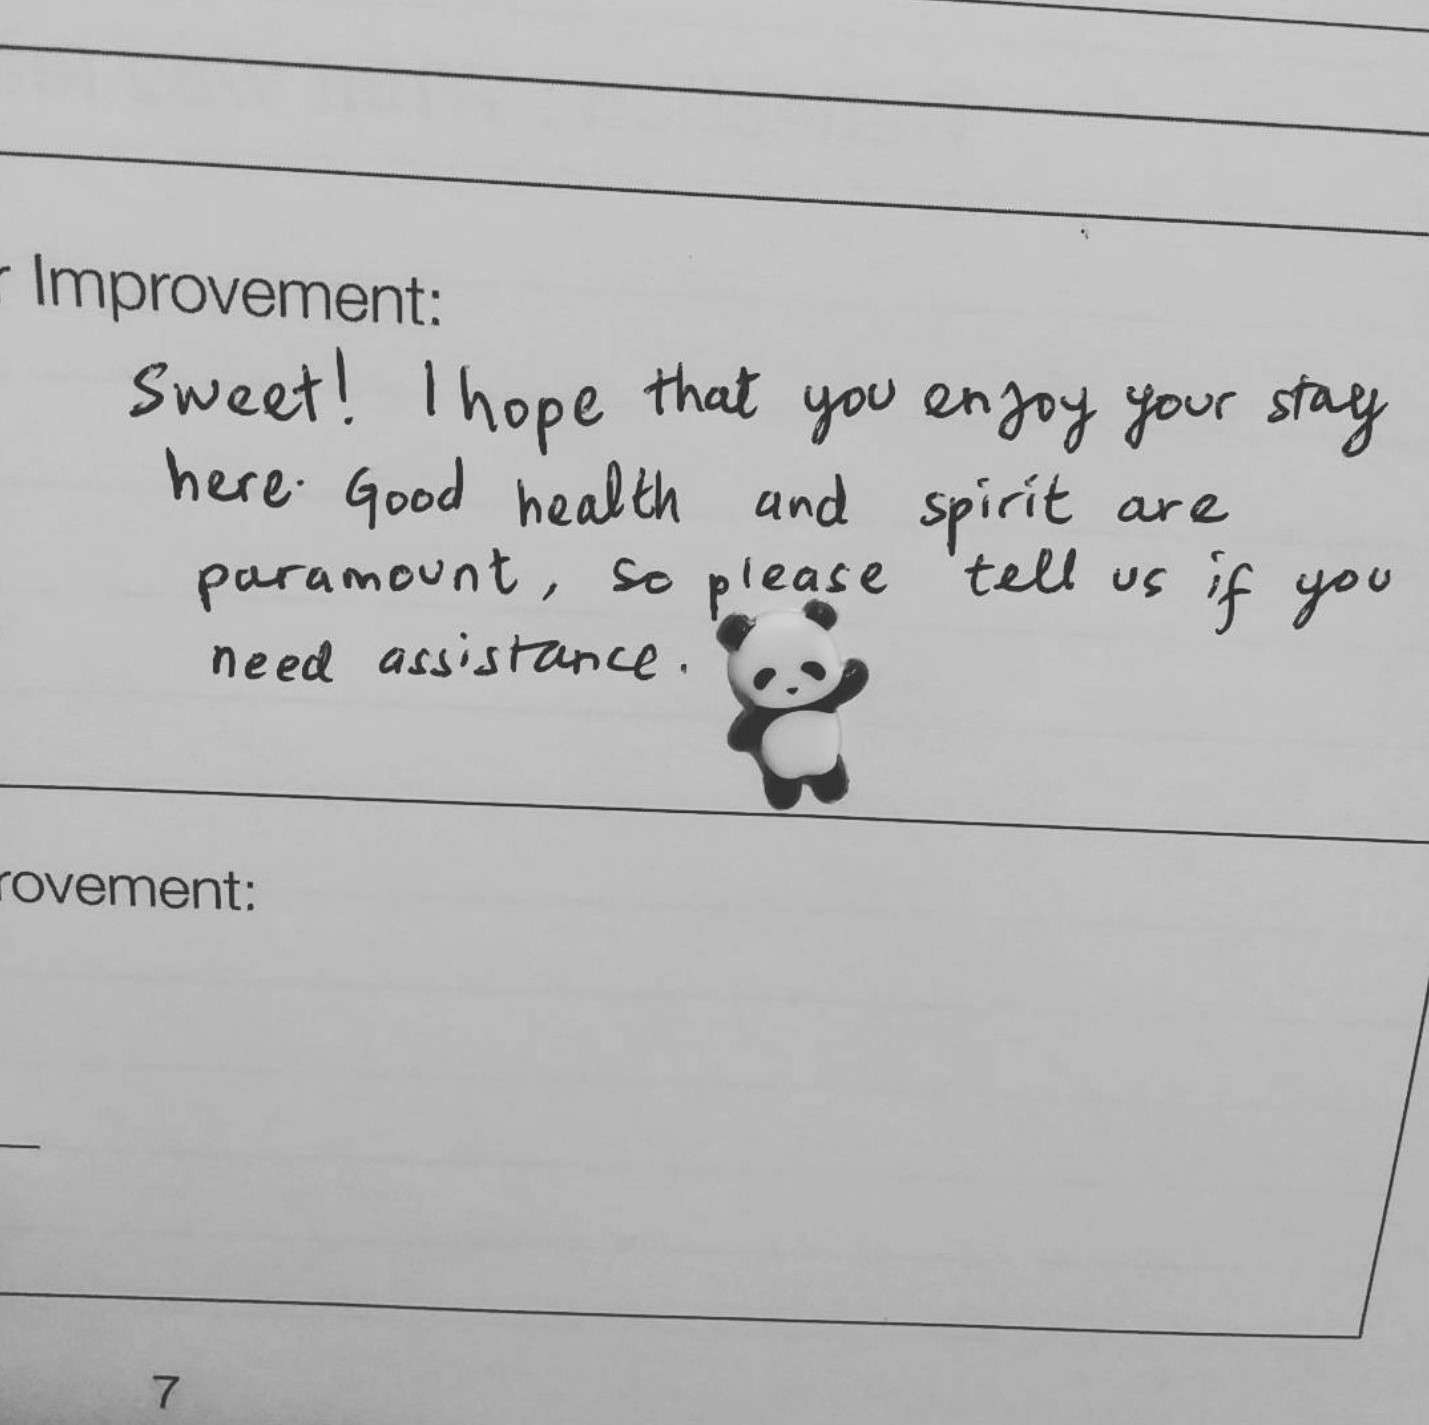 Bali supervisor's encouraging comment